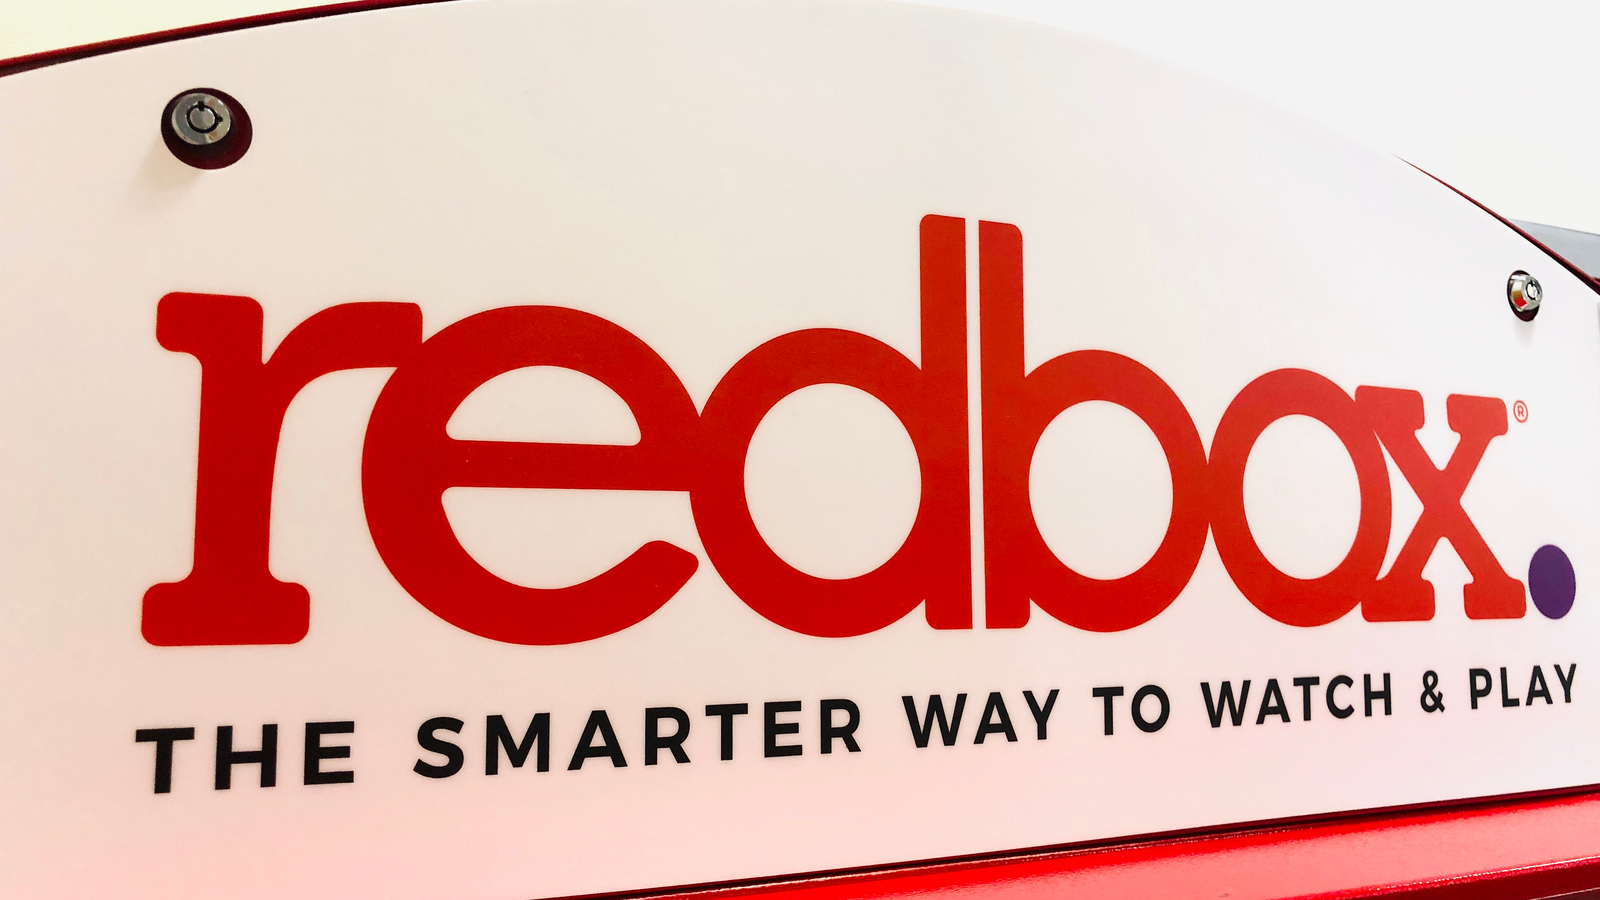 The Redbox logo representing the RDBX stock.